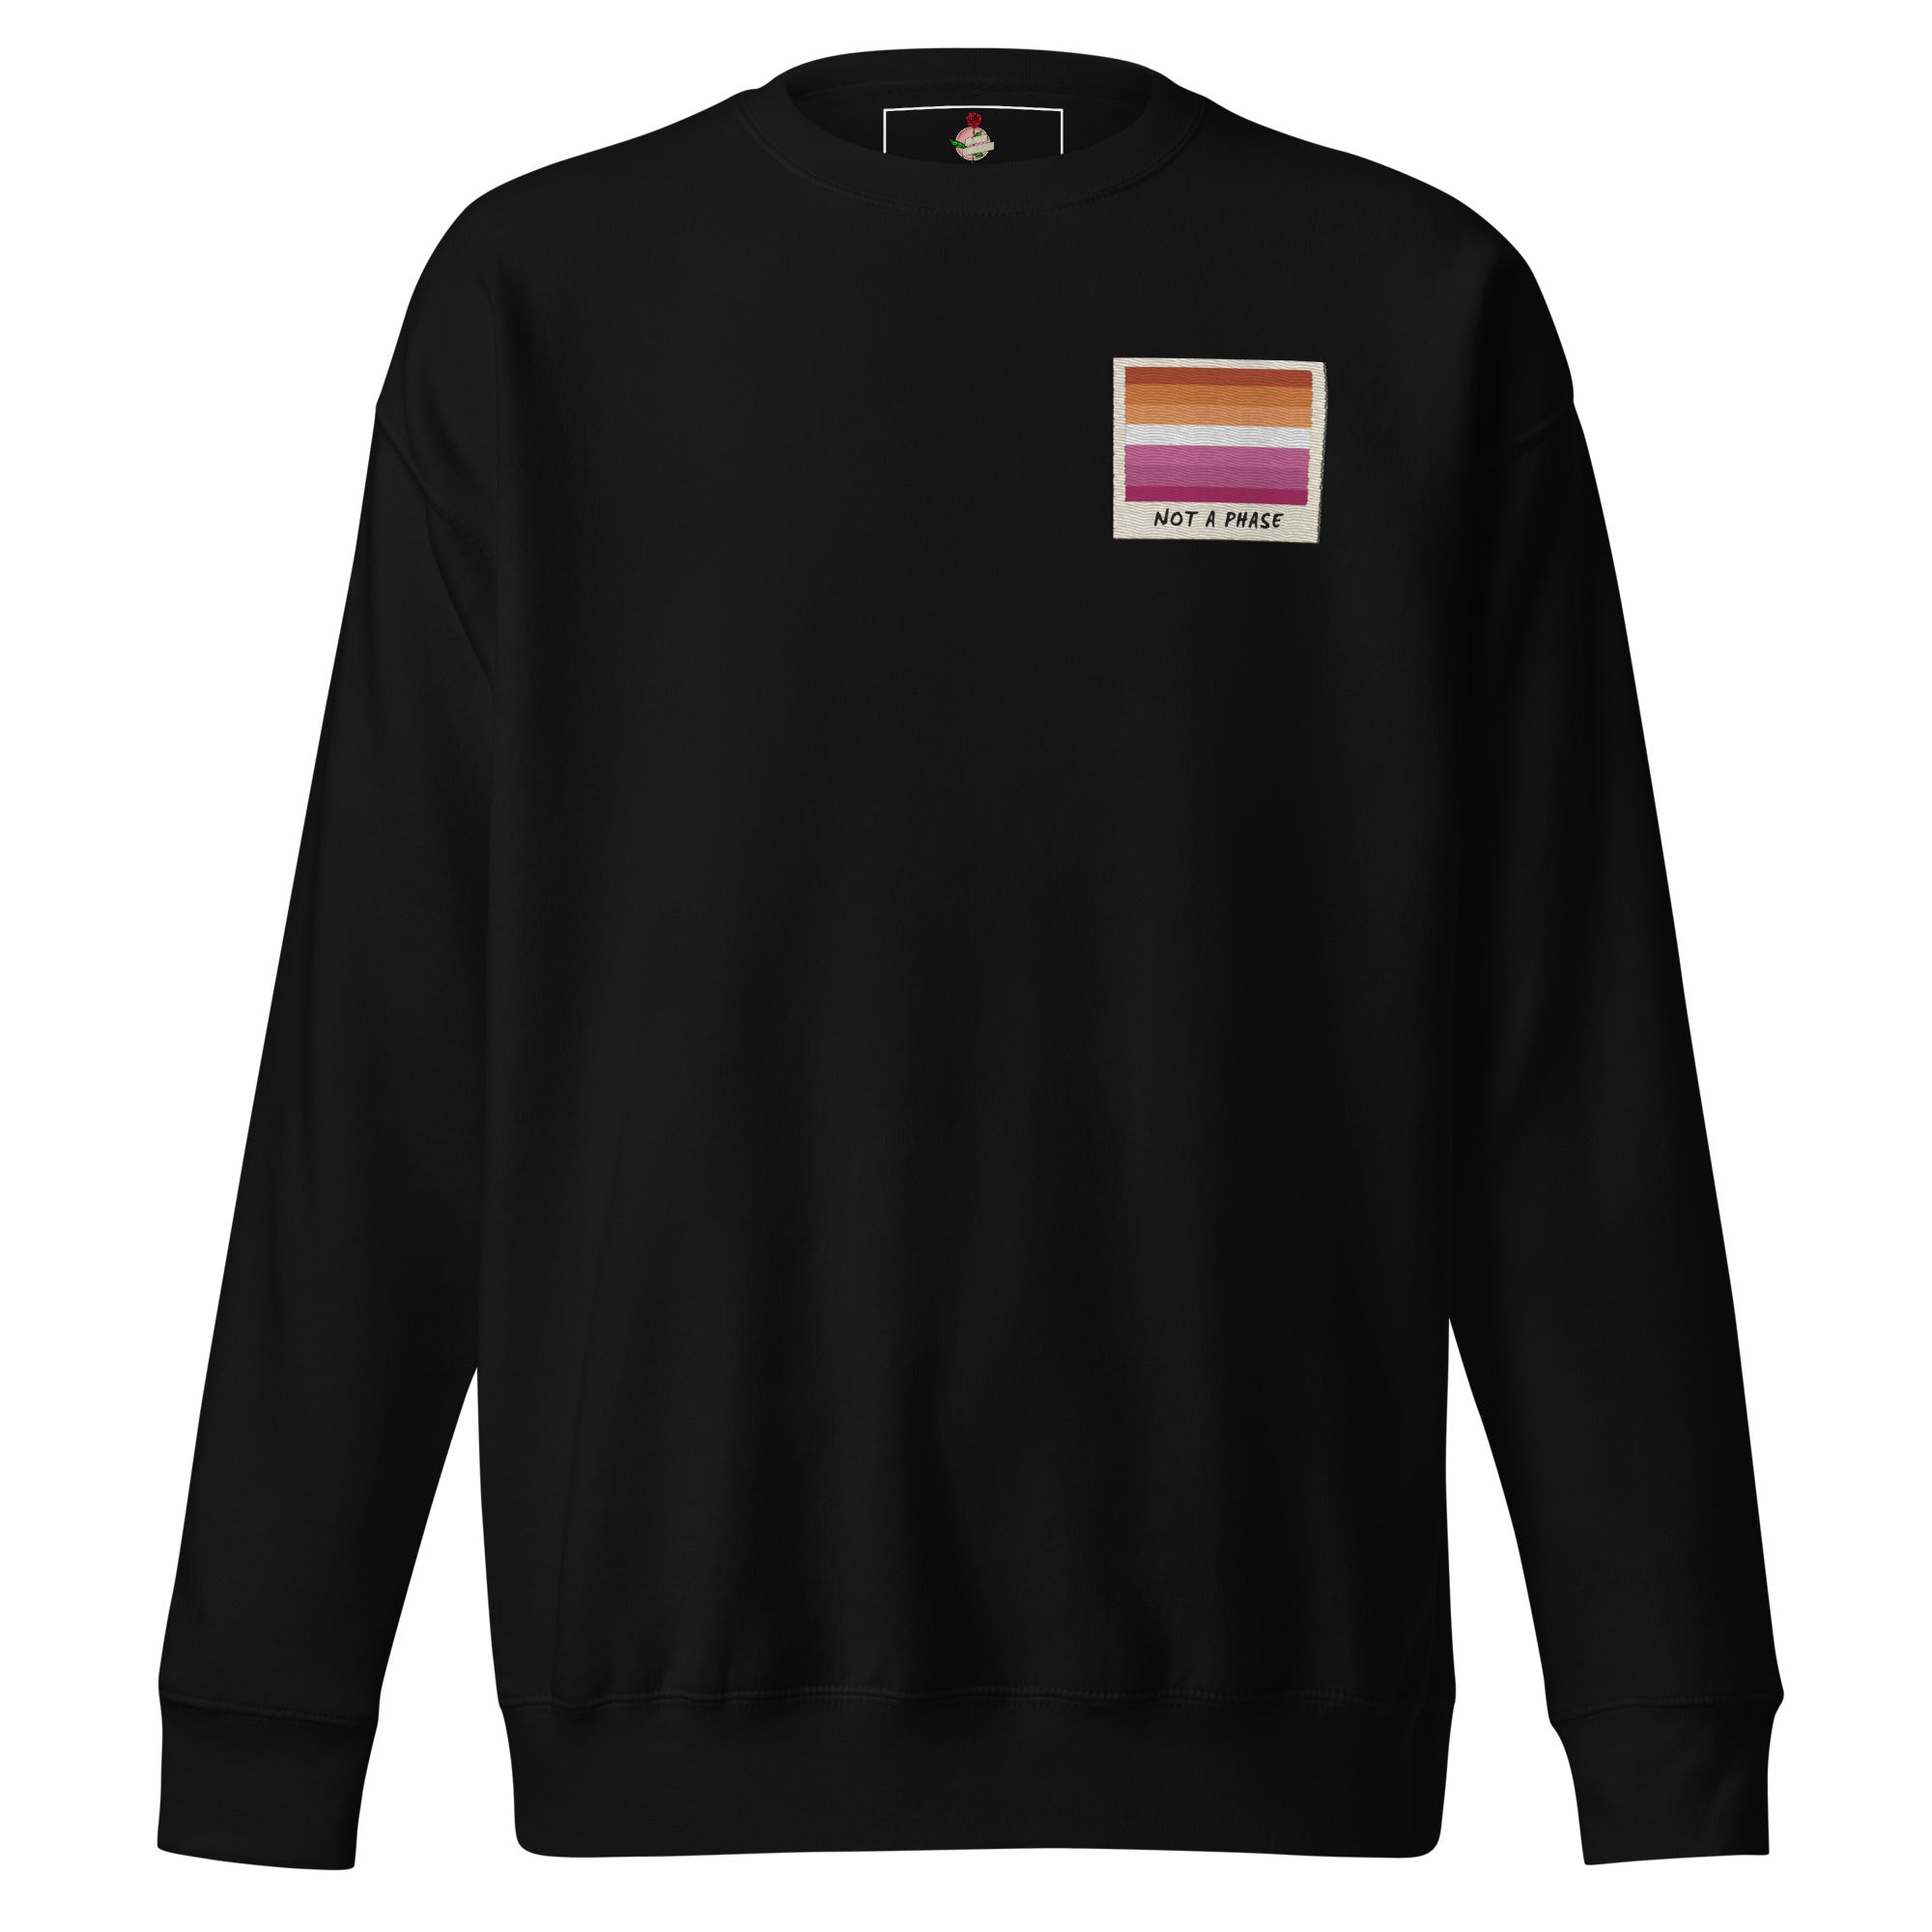 The Not A Phase Lesbian Pride Polaroid Sweatshirt